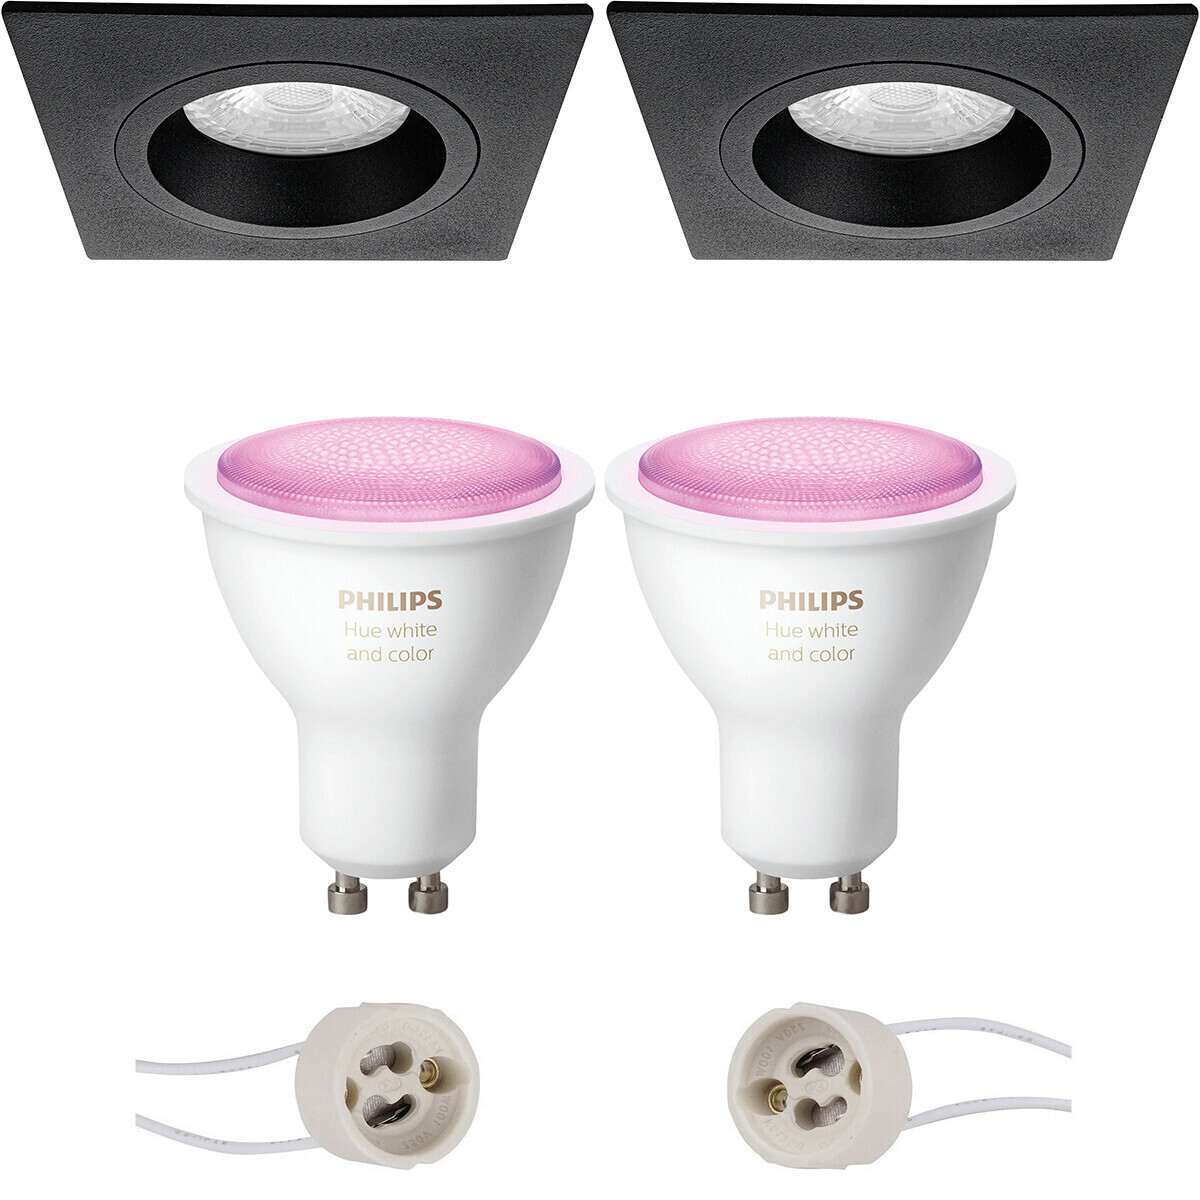 BES LED Pragmi Rodos Pro - Inbouw Vierkant - Mat Zwart - 93mm - Philips Hue - LED Spot Set GU10 - White and Color Ambiance - Bluetooth